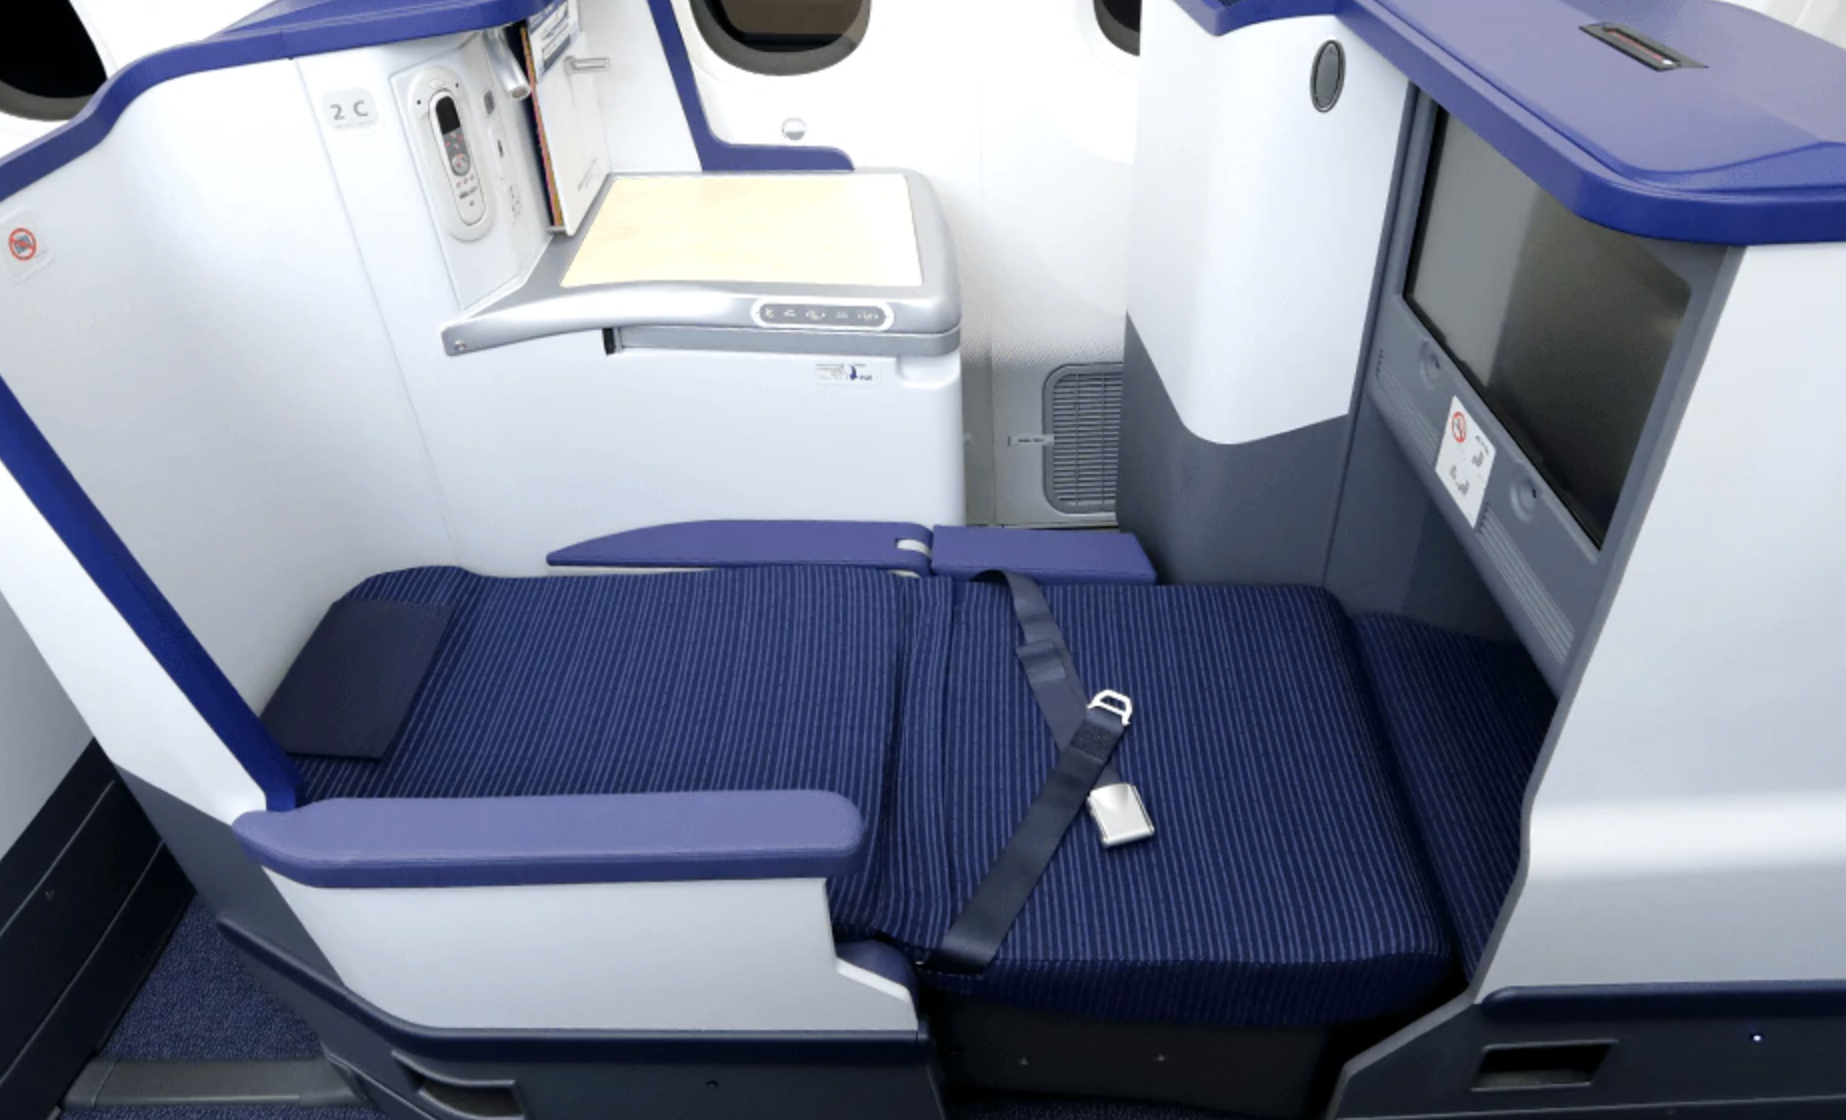 ANA 787-J Business Class seat